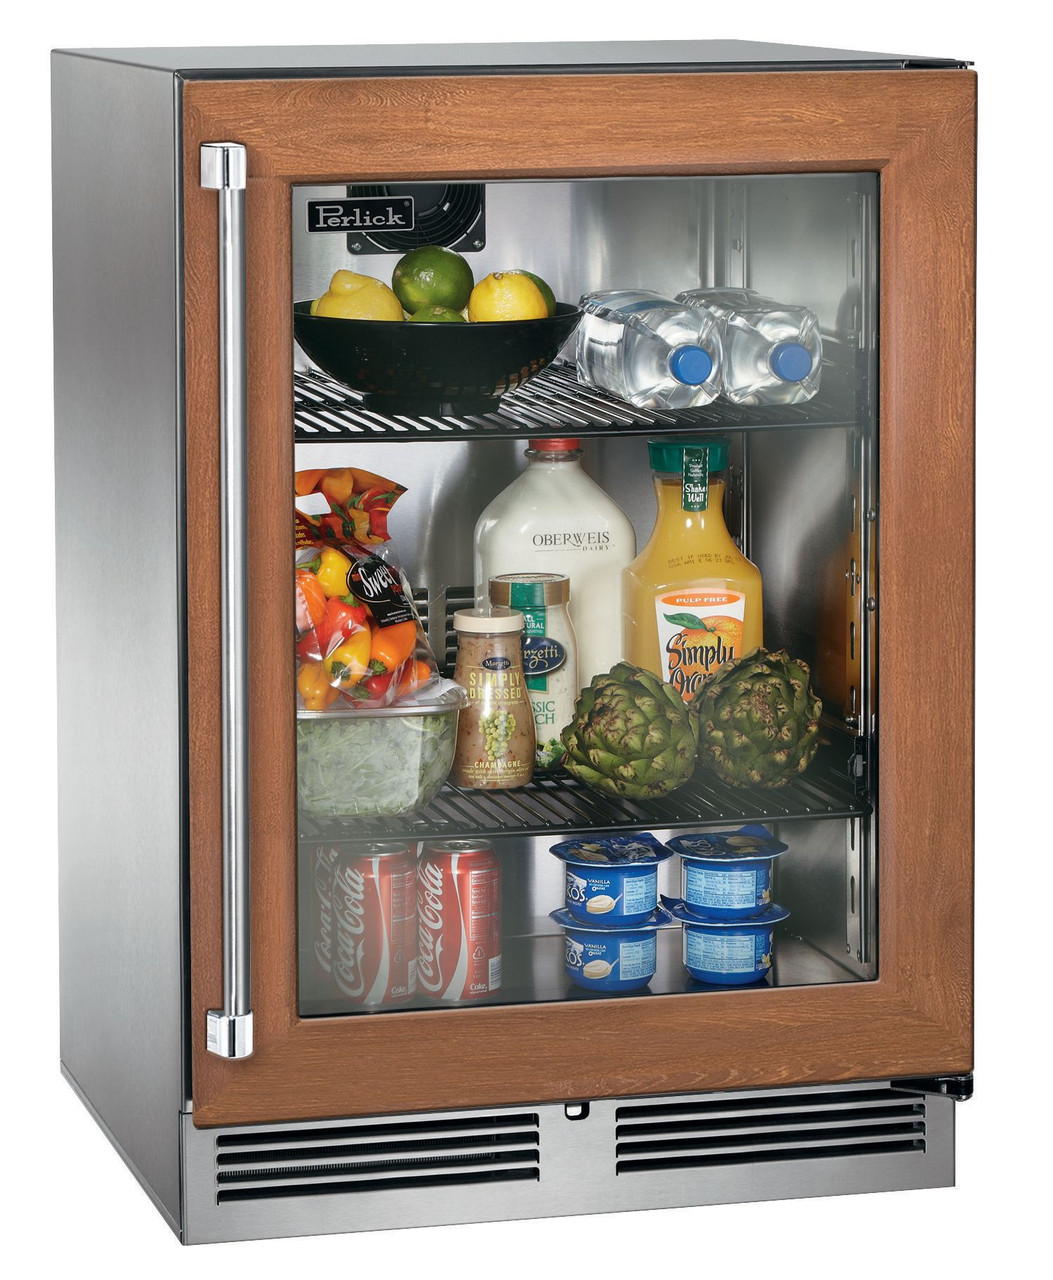 Perlick 24 Signature Series 18 Shallow Depth Outdoor Marine Grade  Refrigerator with Panel Ready Glass Door - HH24RM-4-4